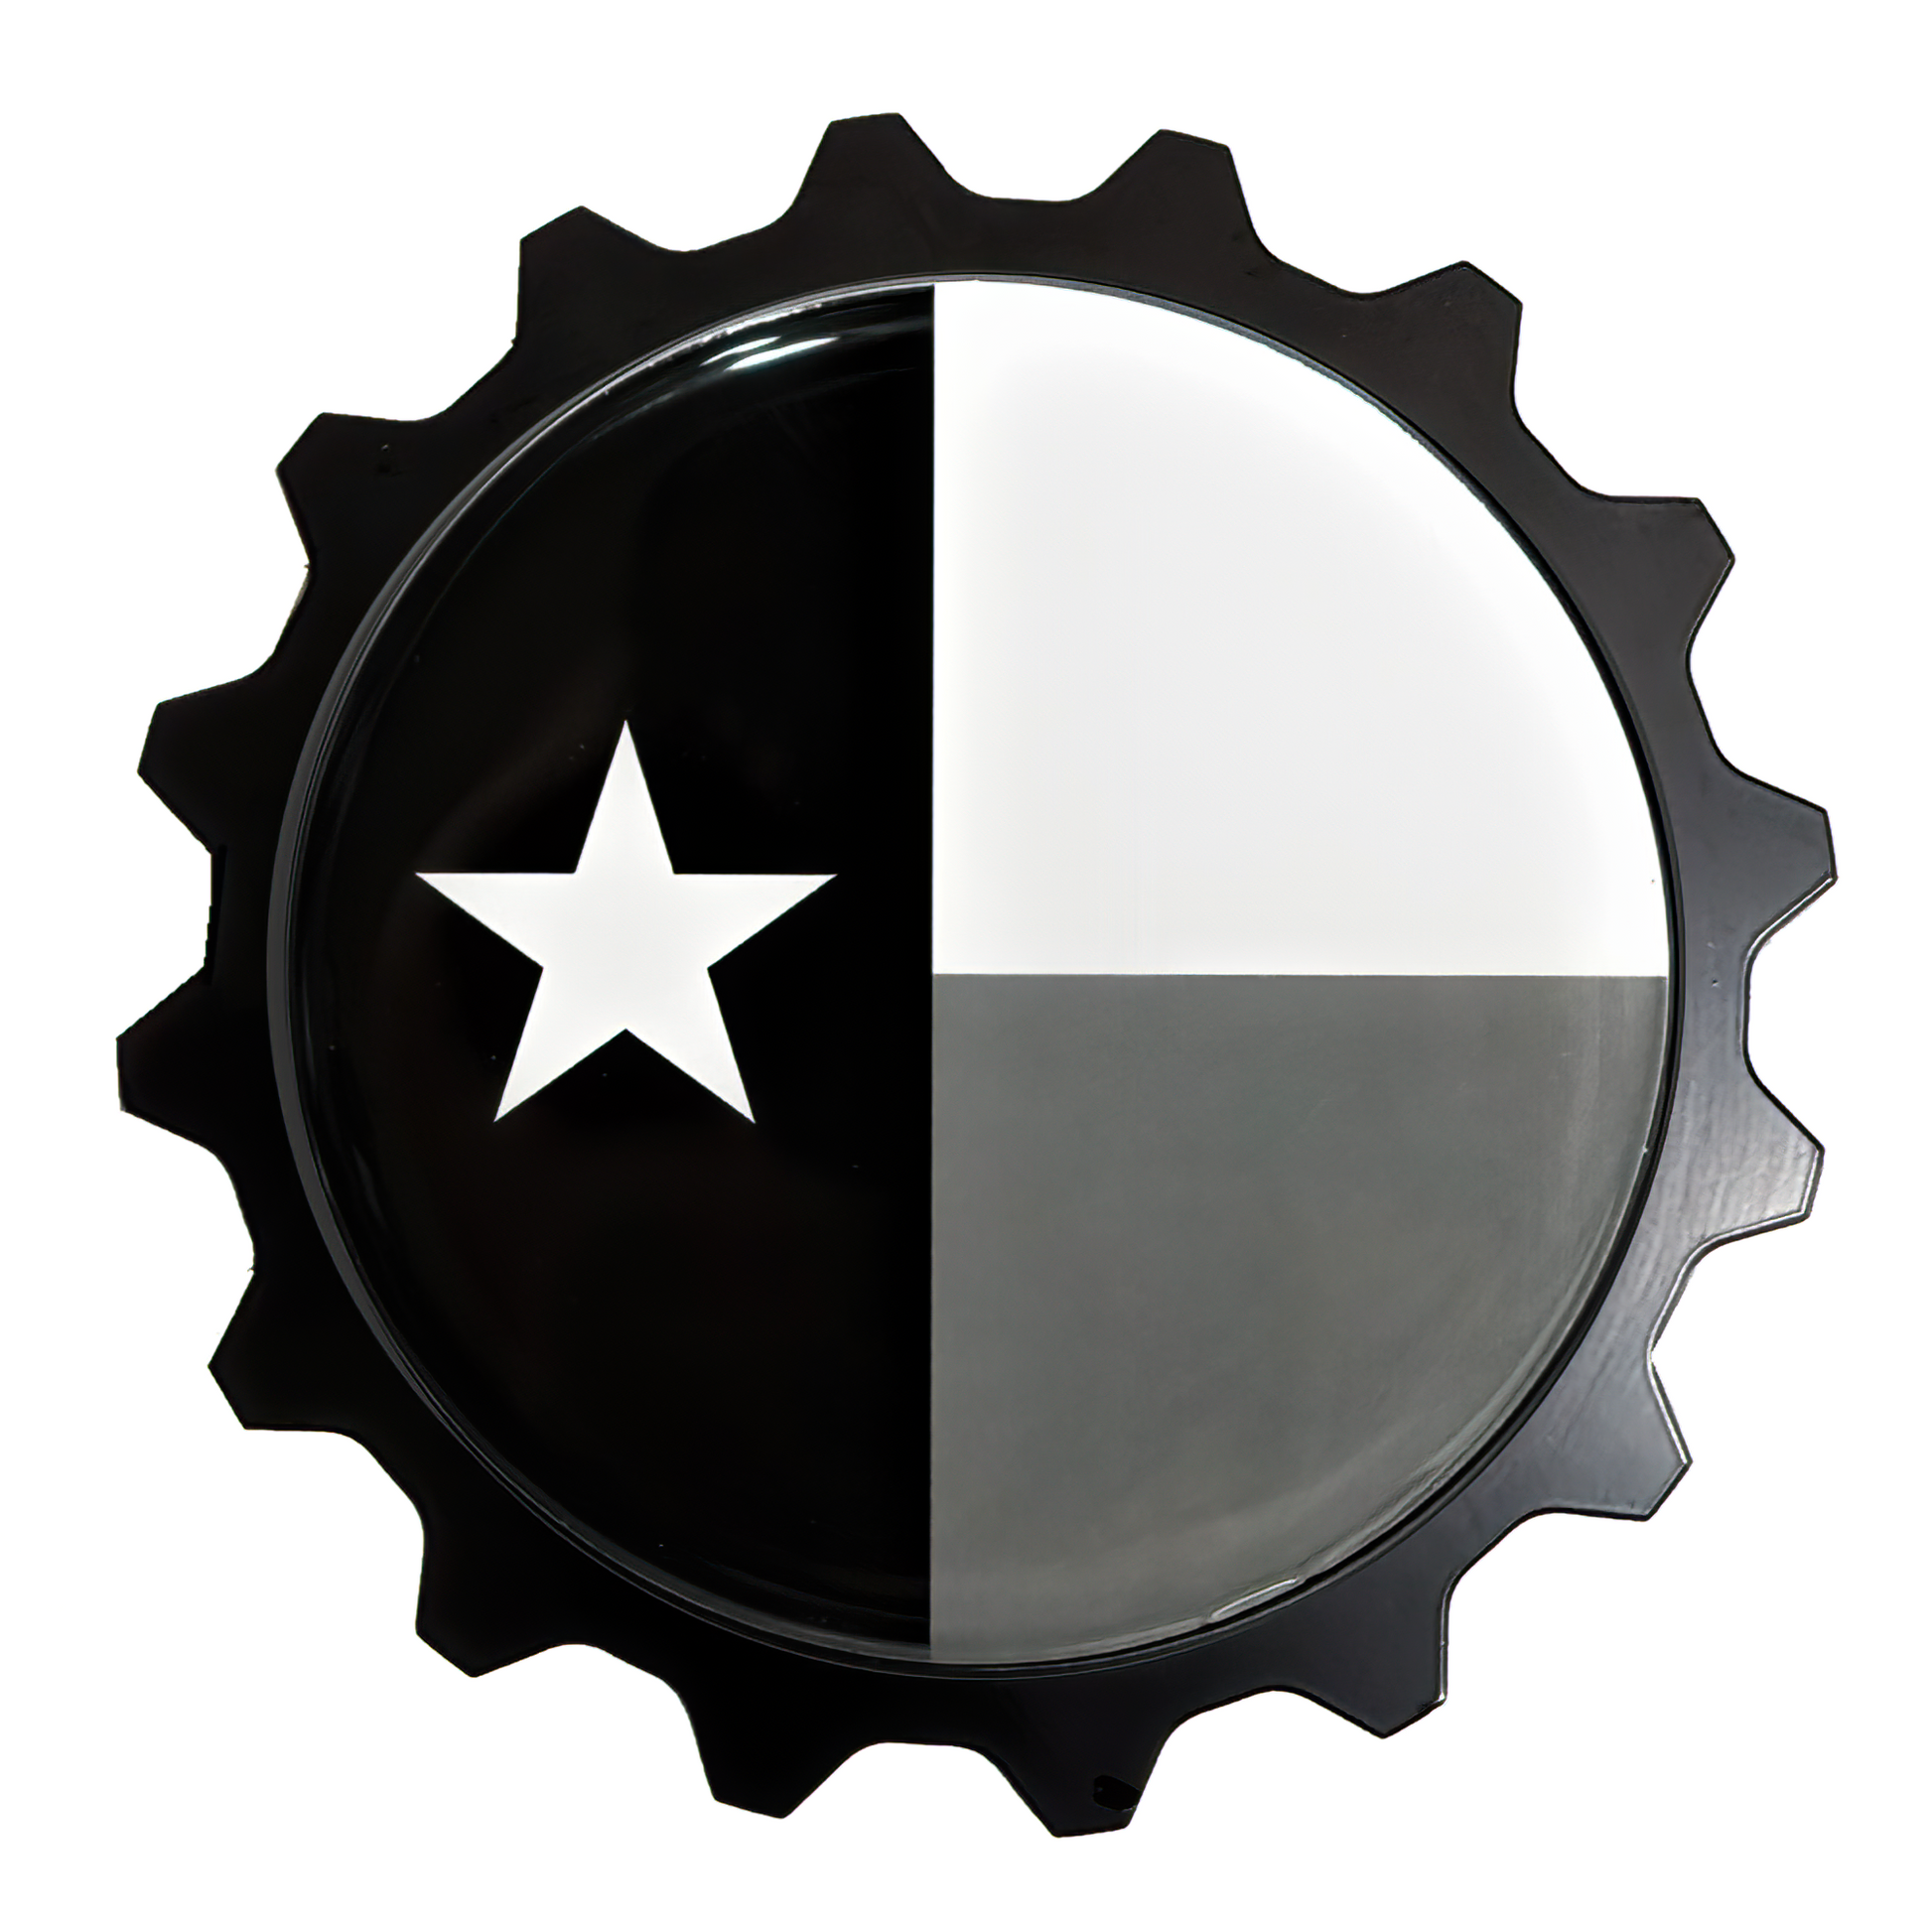 State of Texas Badge, Club Badge 4x4 Offroad, Texas Tacoma FJ Cruisers Club - State Texas Flag